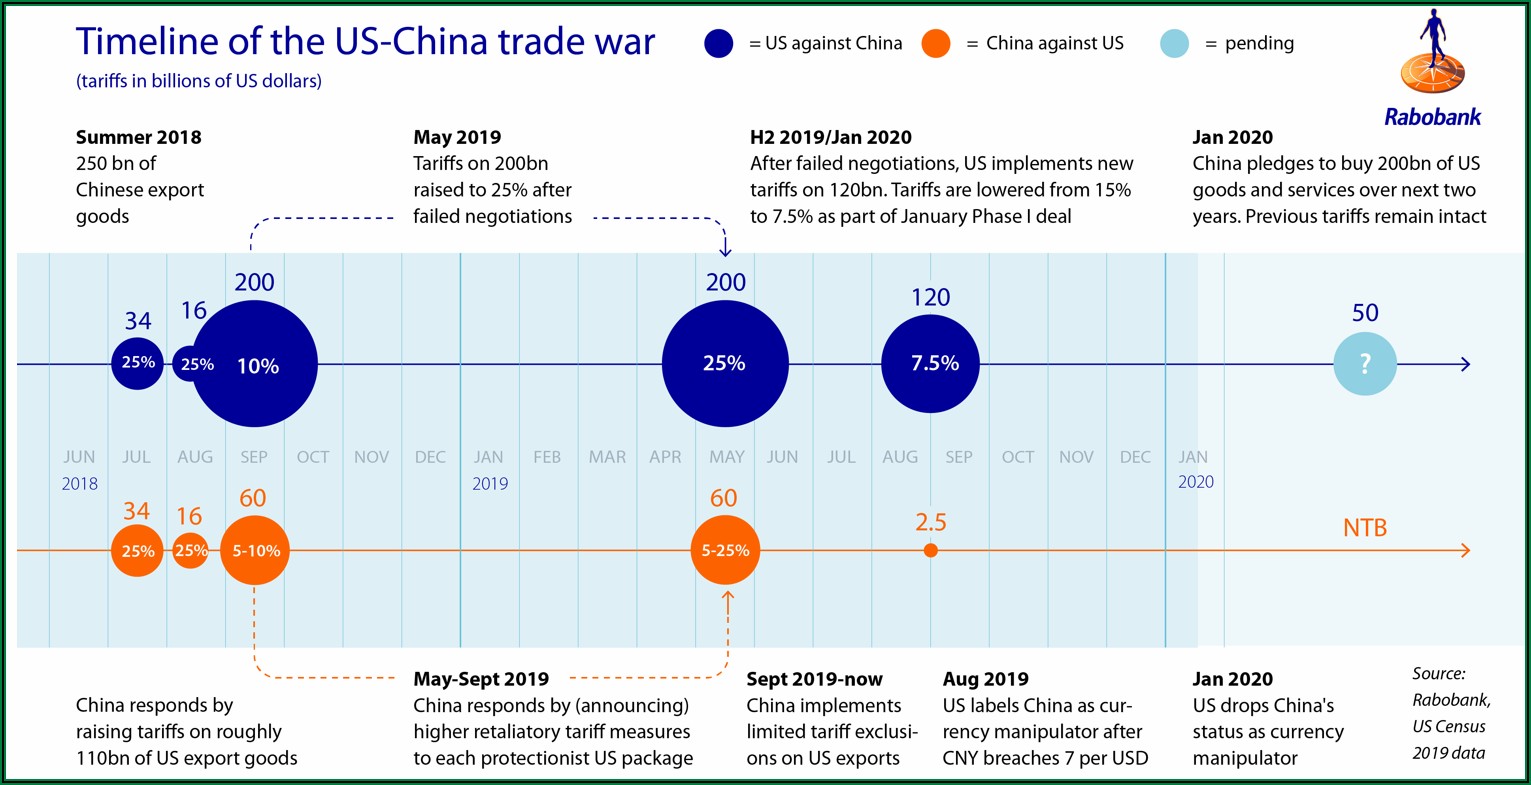 Piie Trade War Timeline